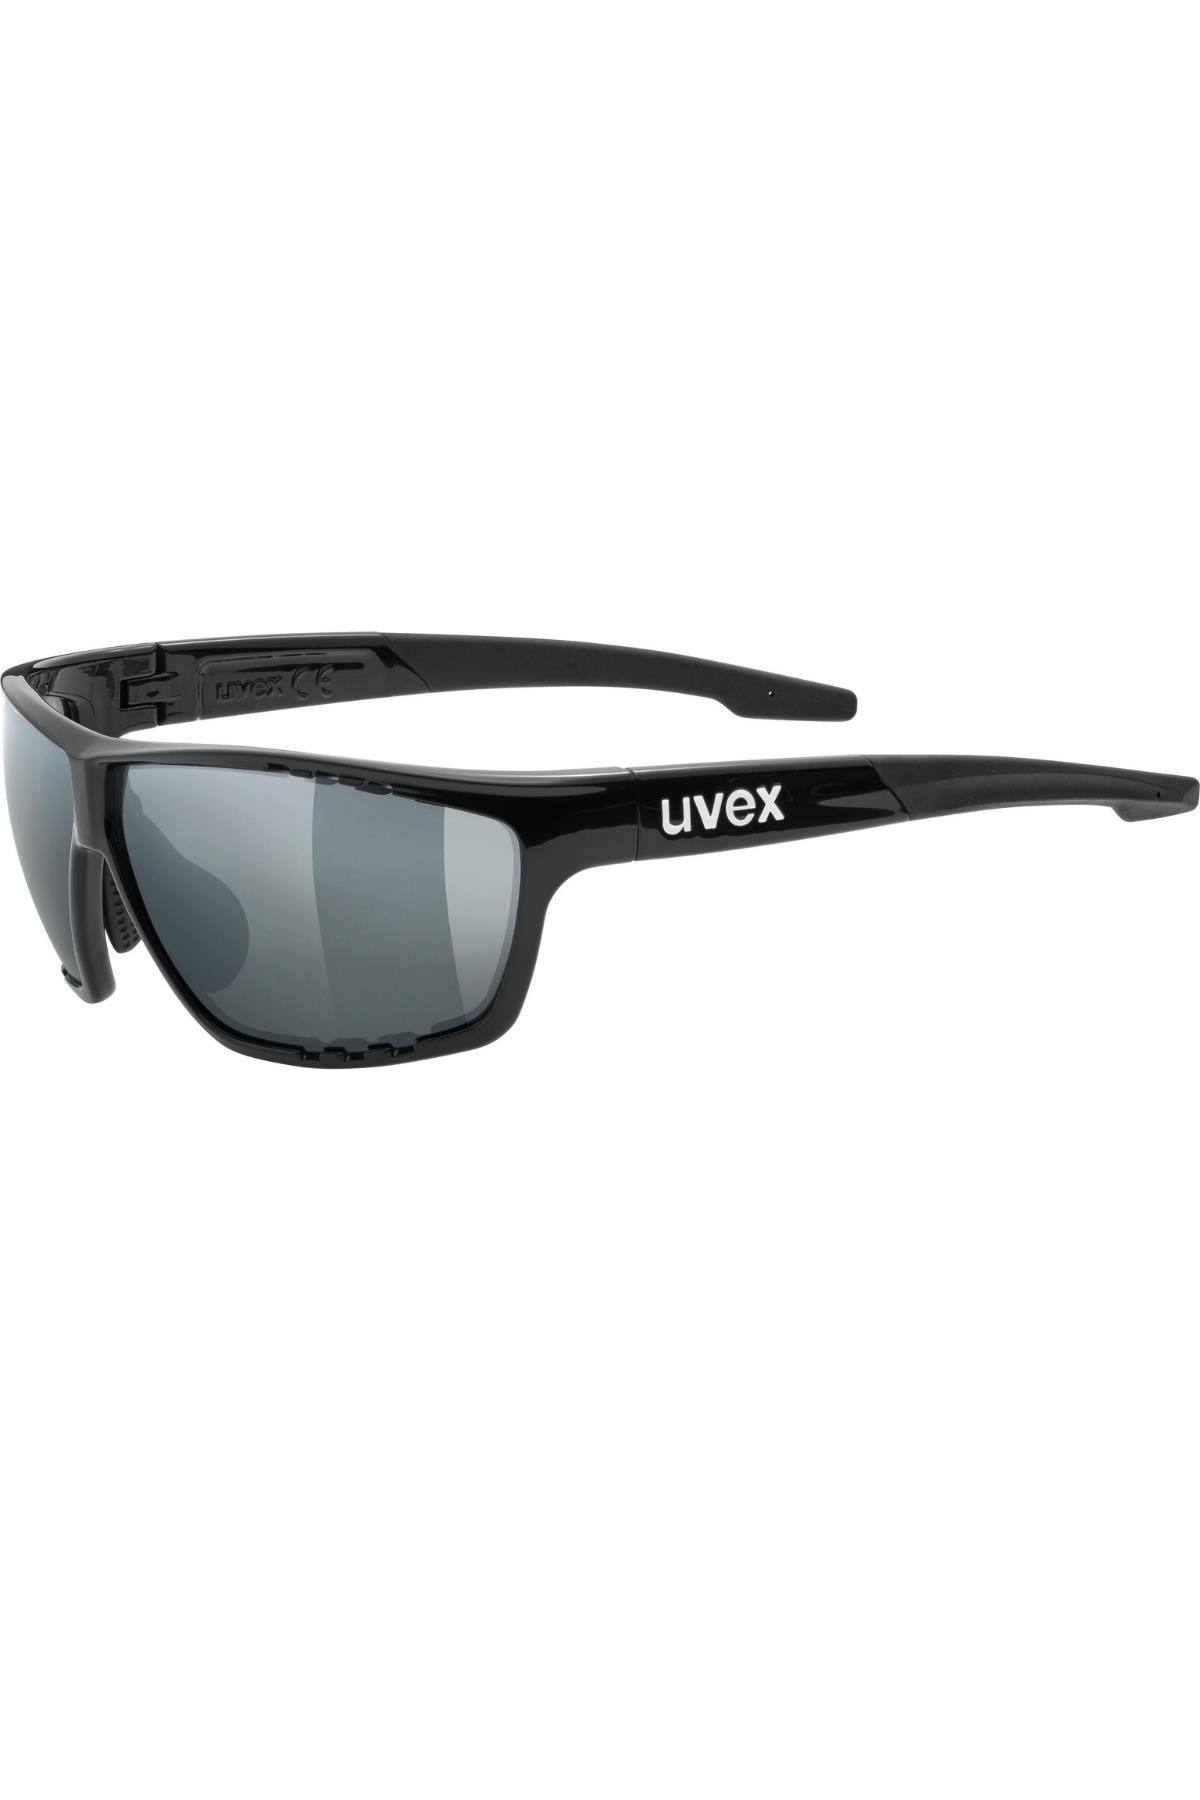 Uvex Sportstyle 706 Black / Ltm.Silver Güneş Gözlüğü